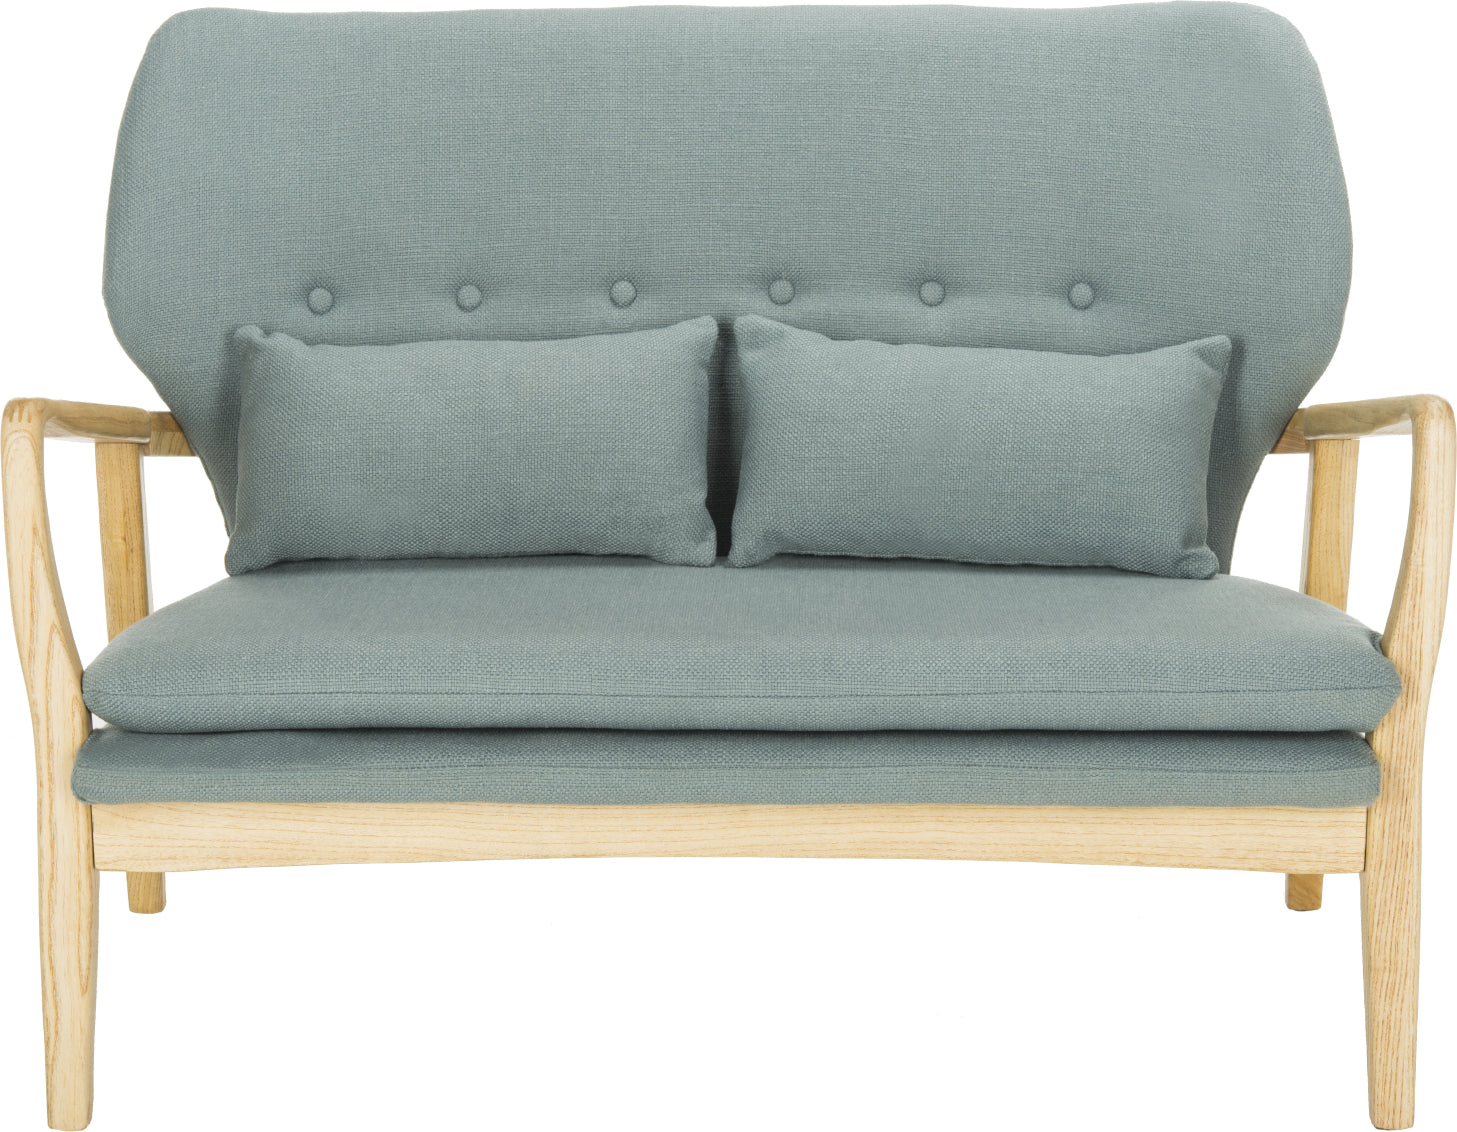 Safavieh Ellaria Loveseat Blue and Natural Furniture main image